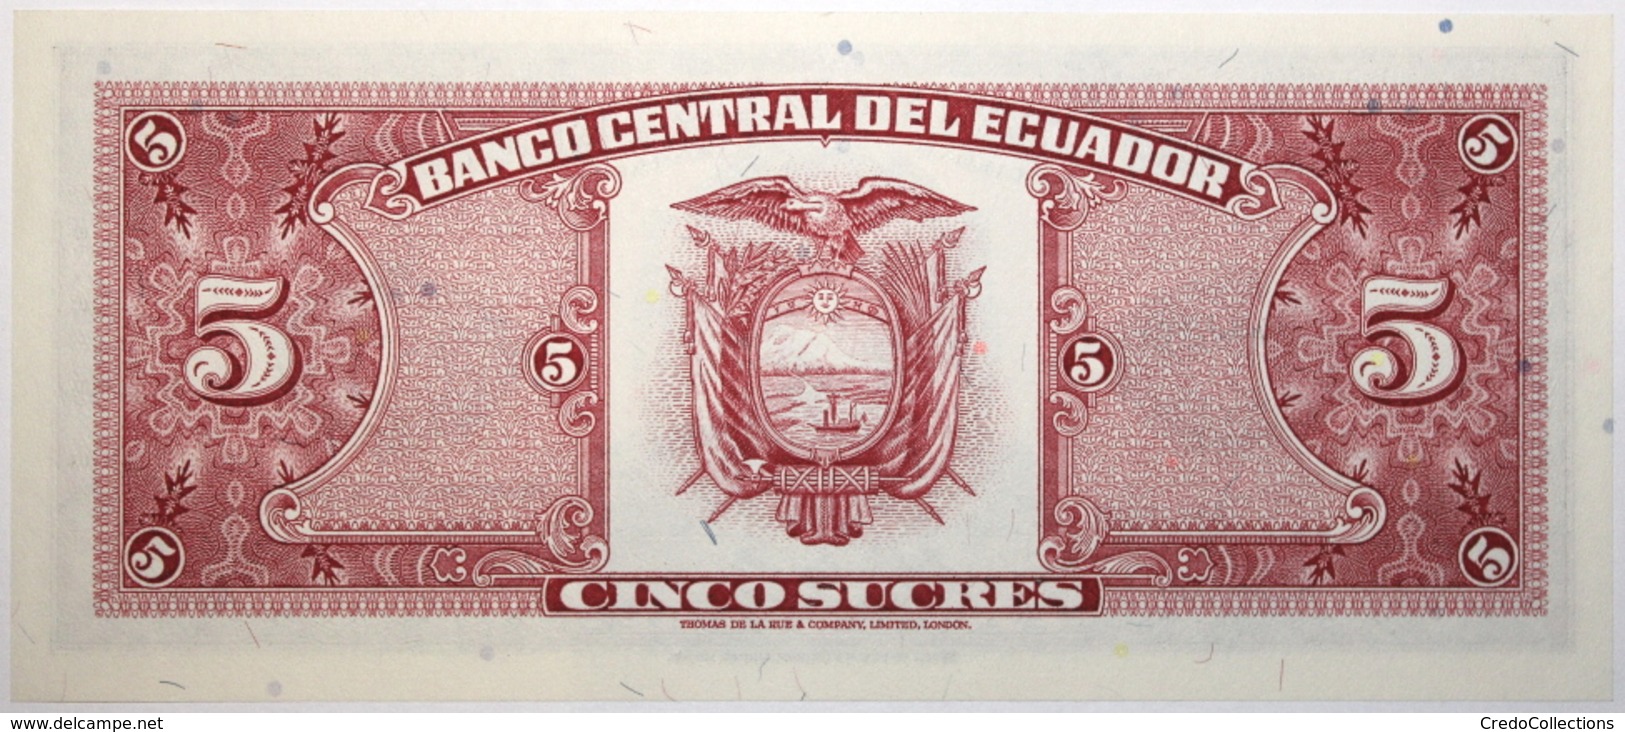 Équateur - 5 Sucres - 1988 - PICK 113d.1 - NEUF - Ecuador